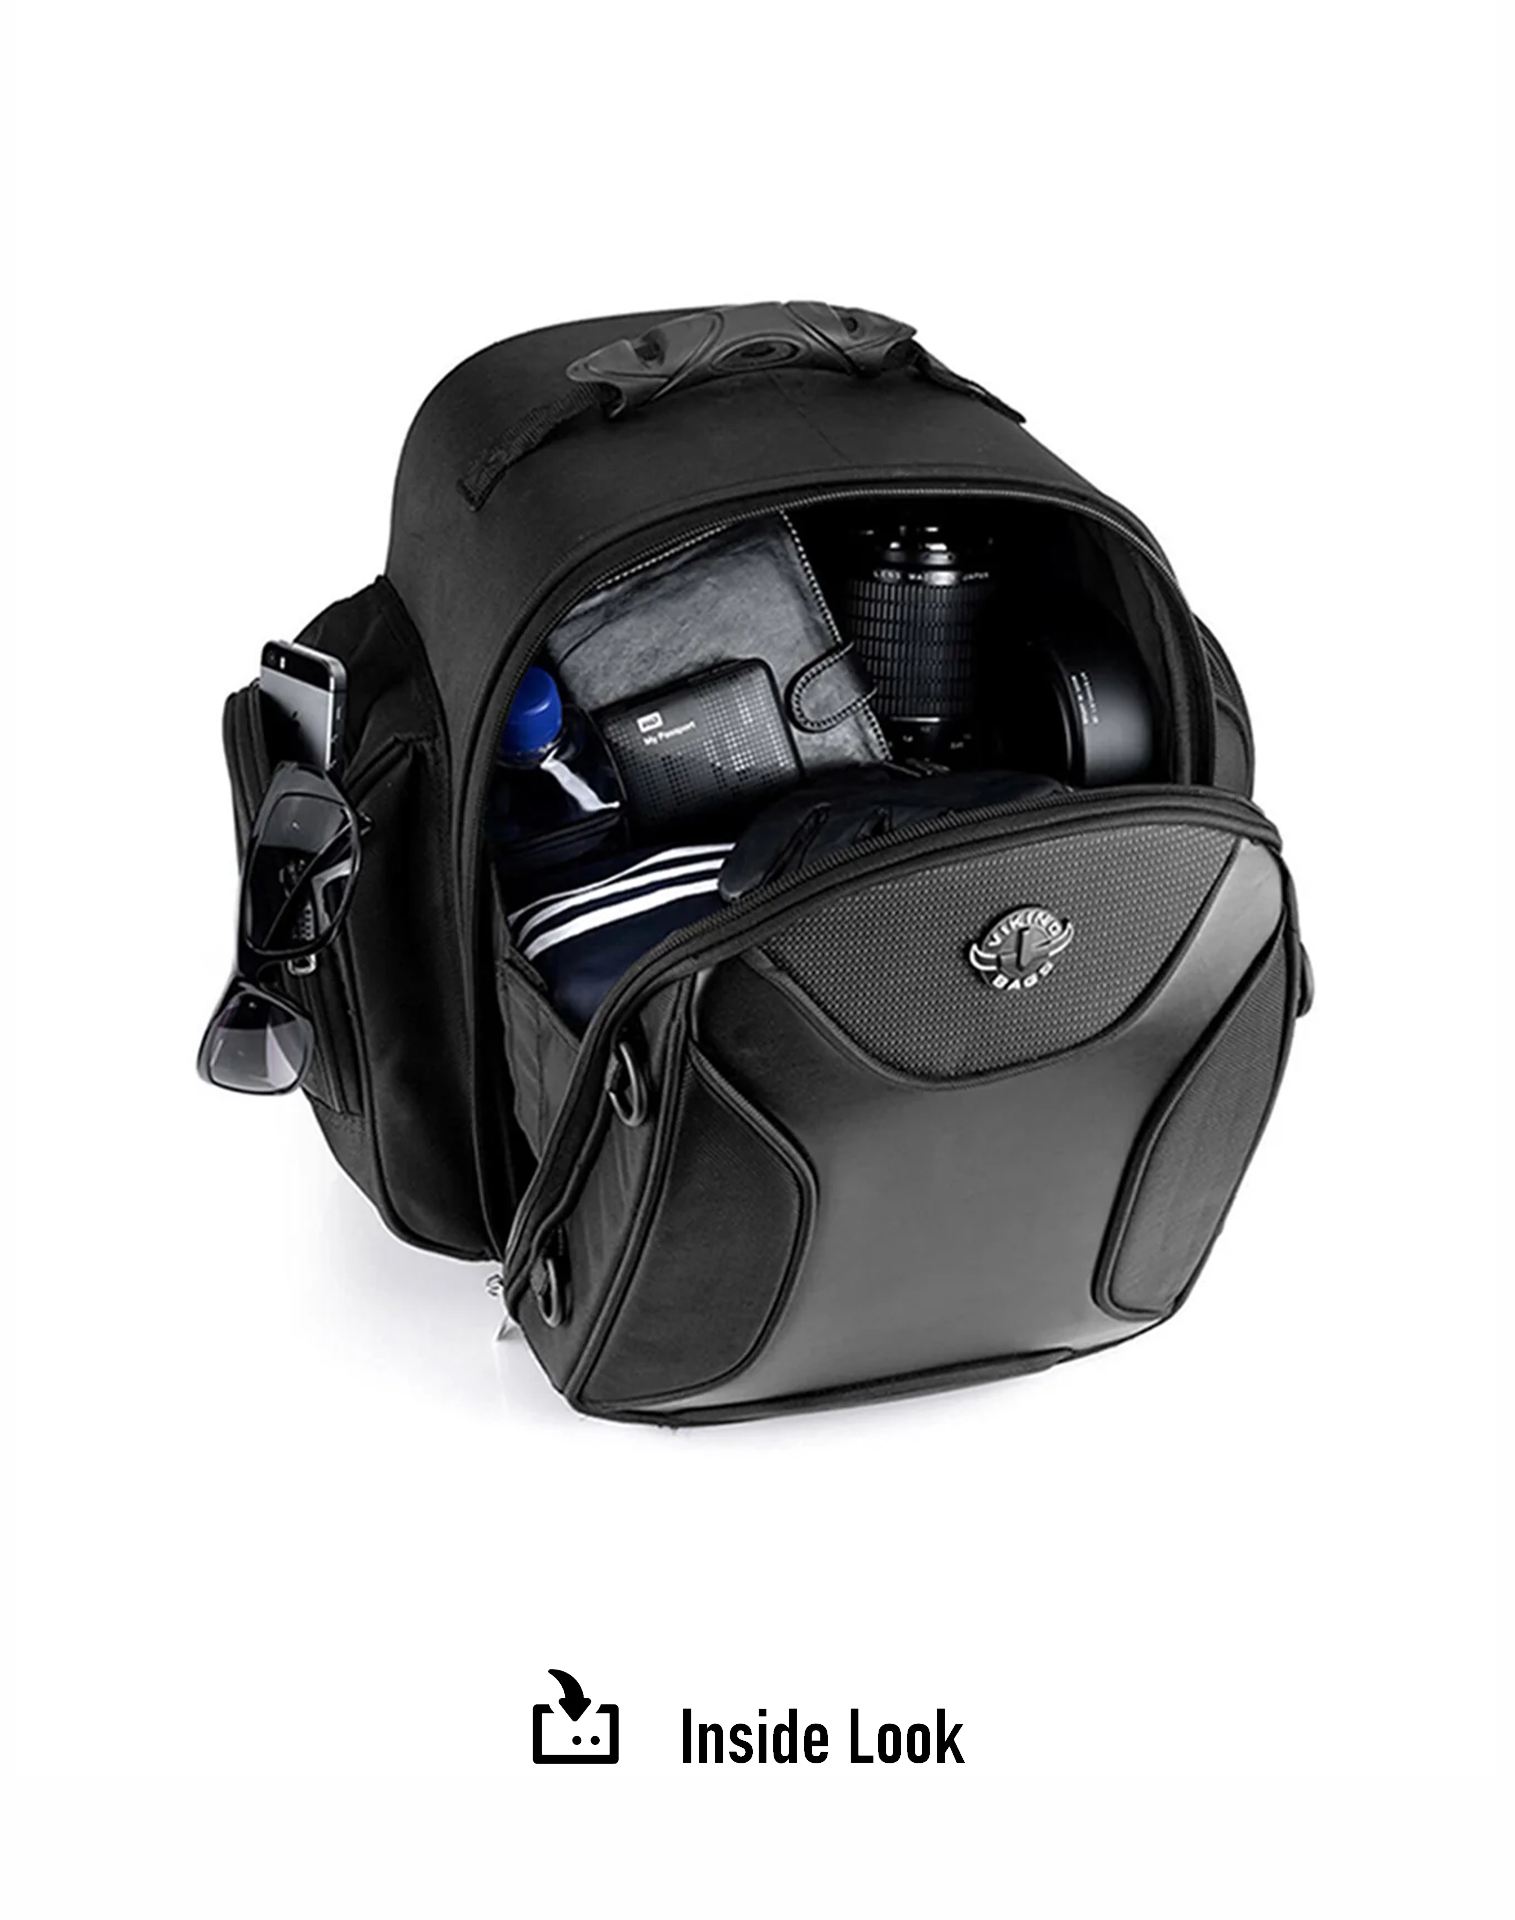 22L - Dagr Medium Hysoung Motorcycle Tail Bag